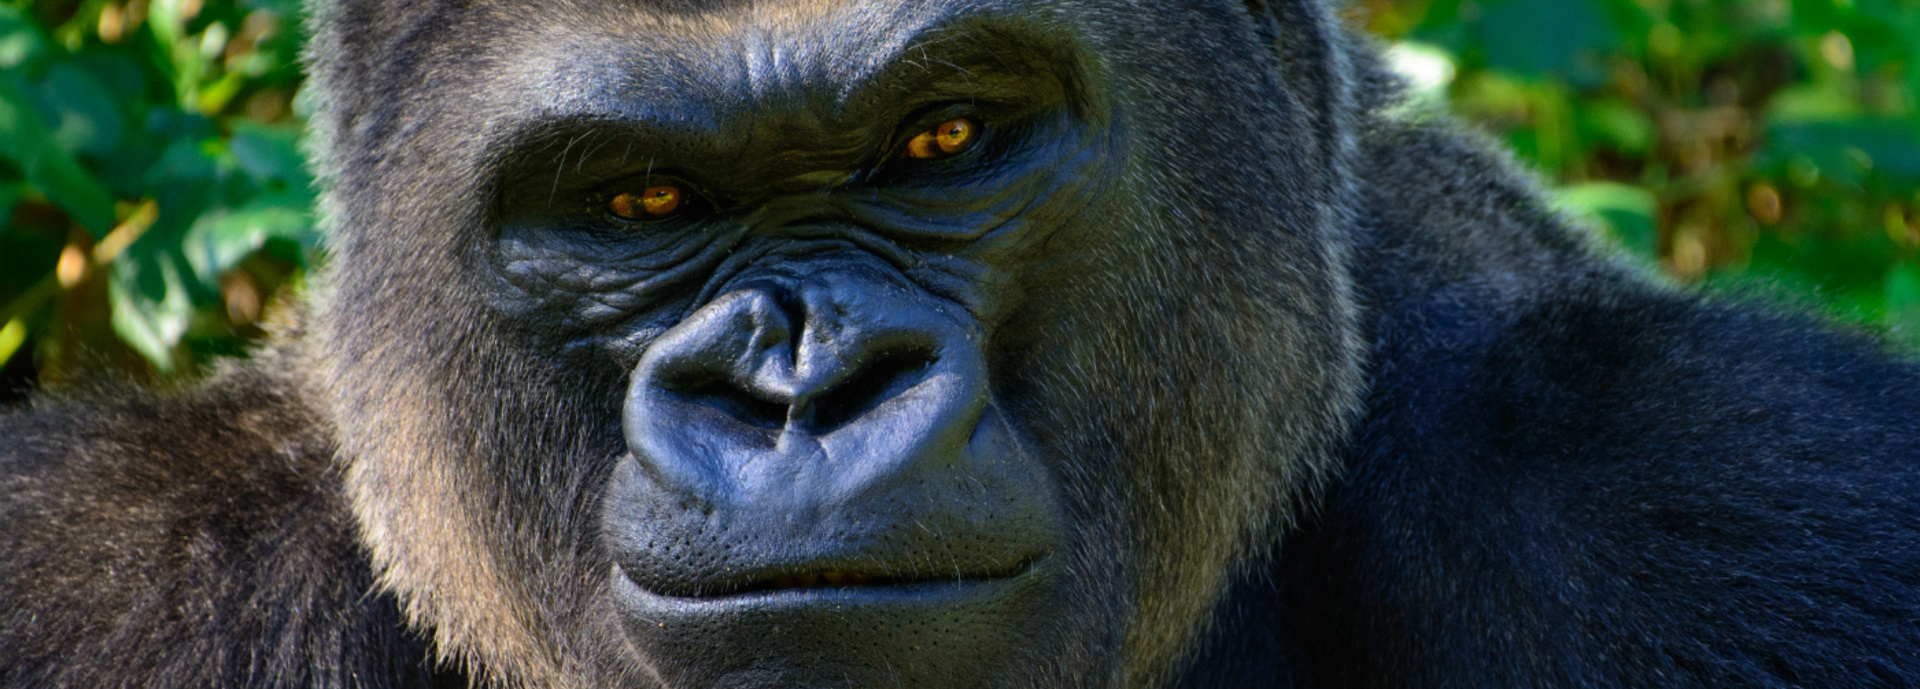 An image of a Gorilla